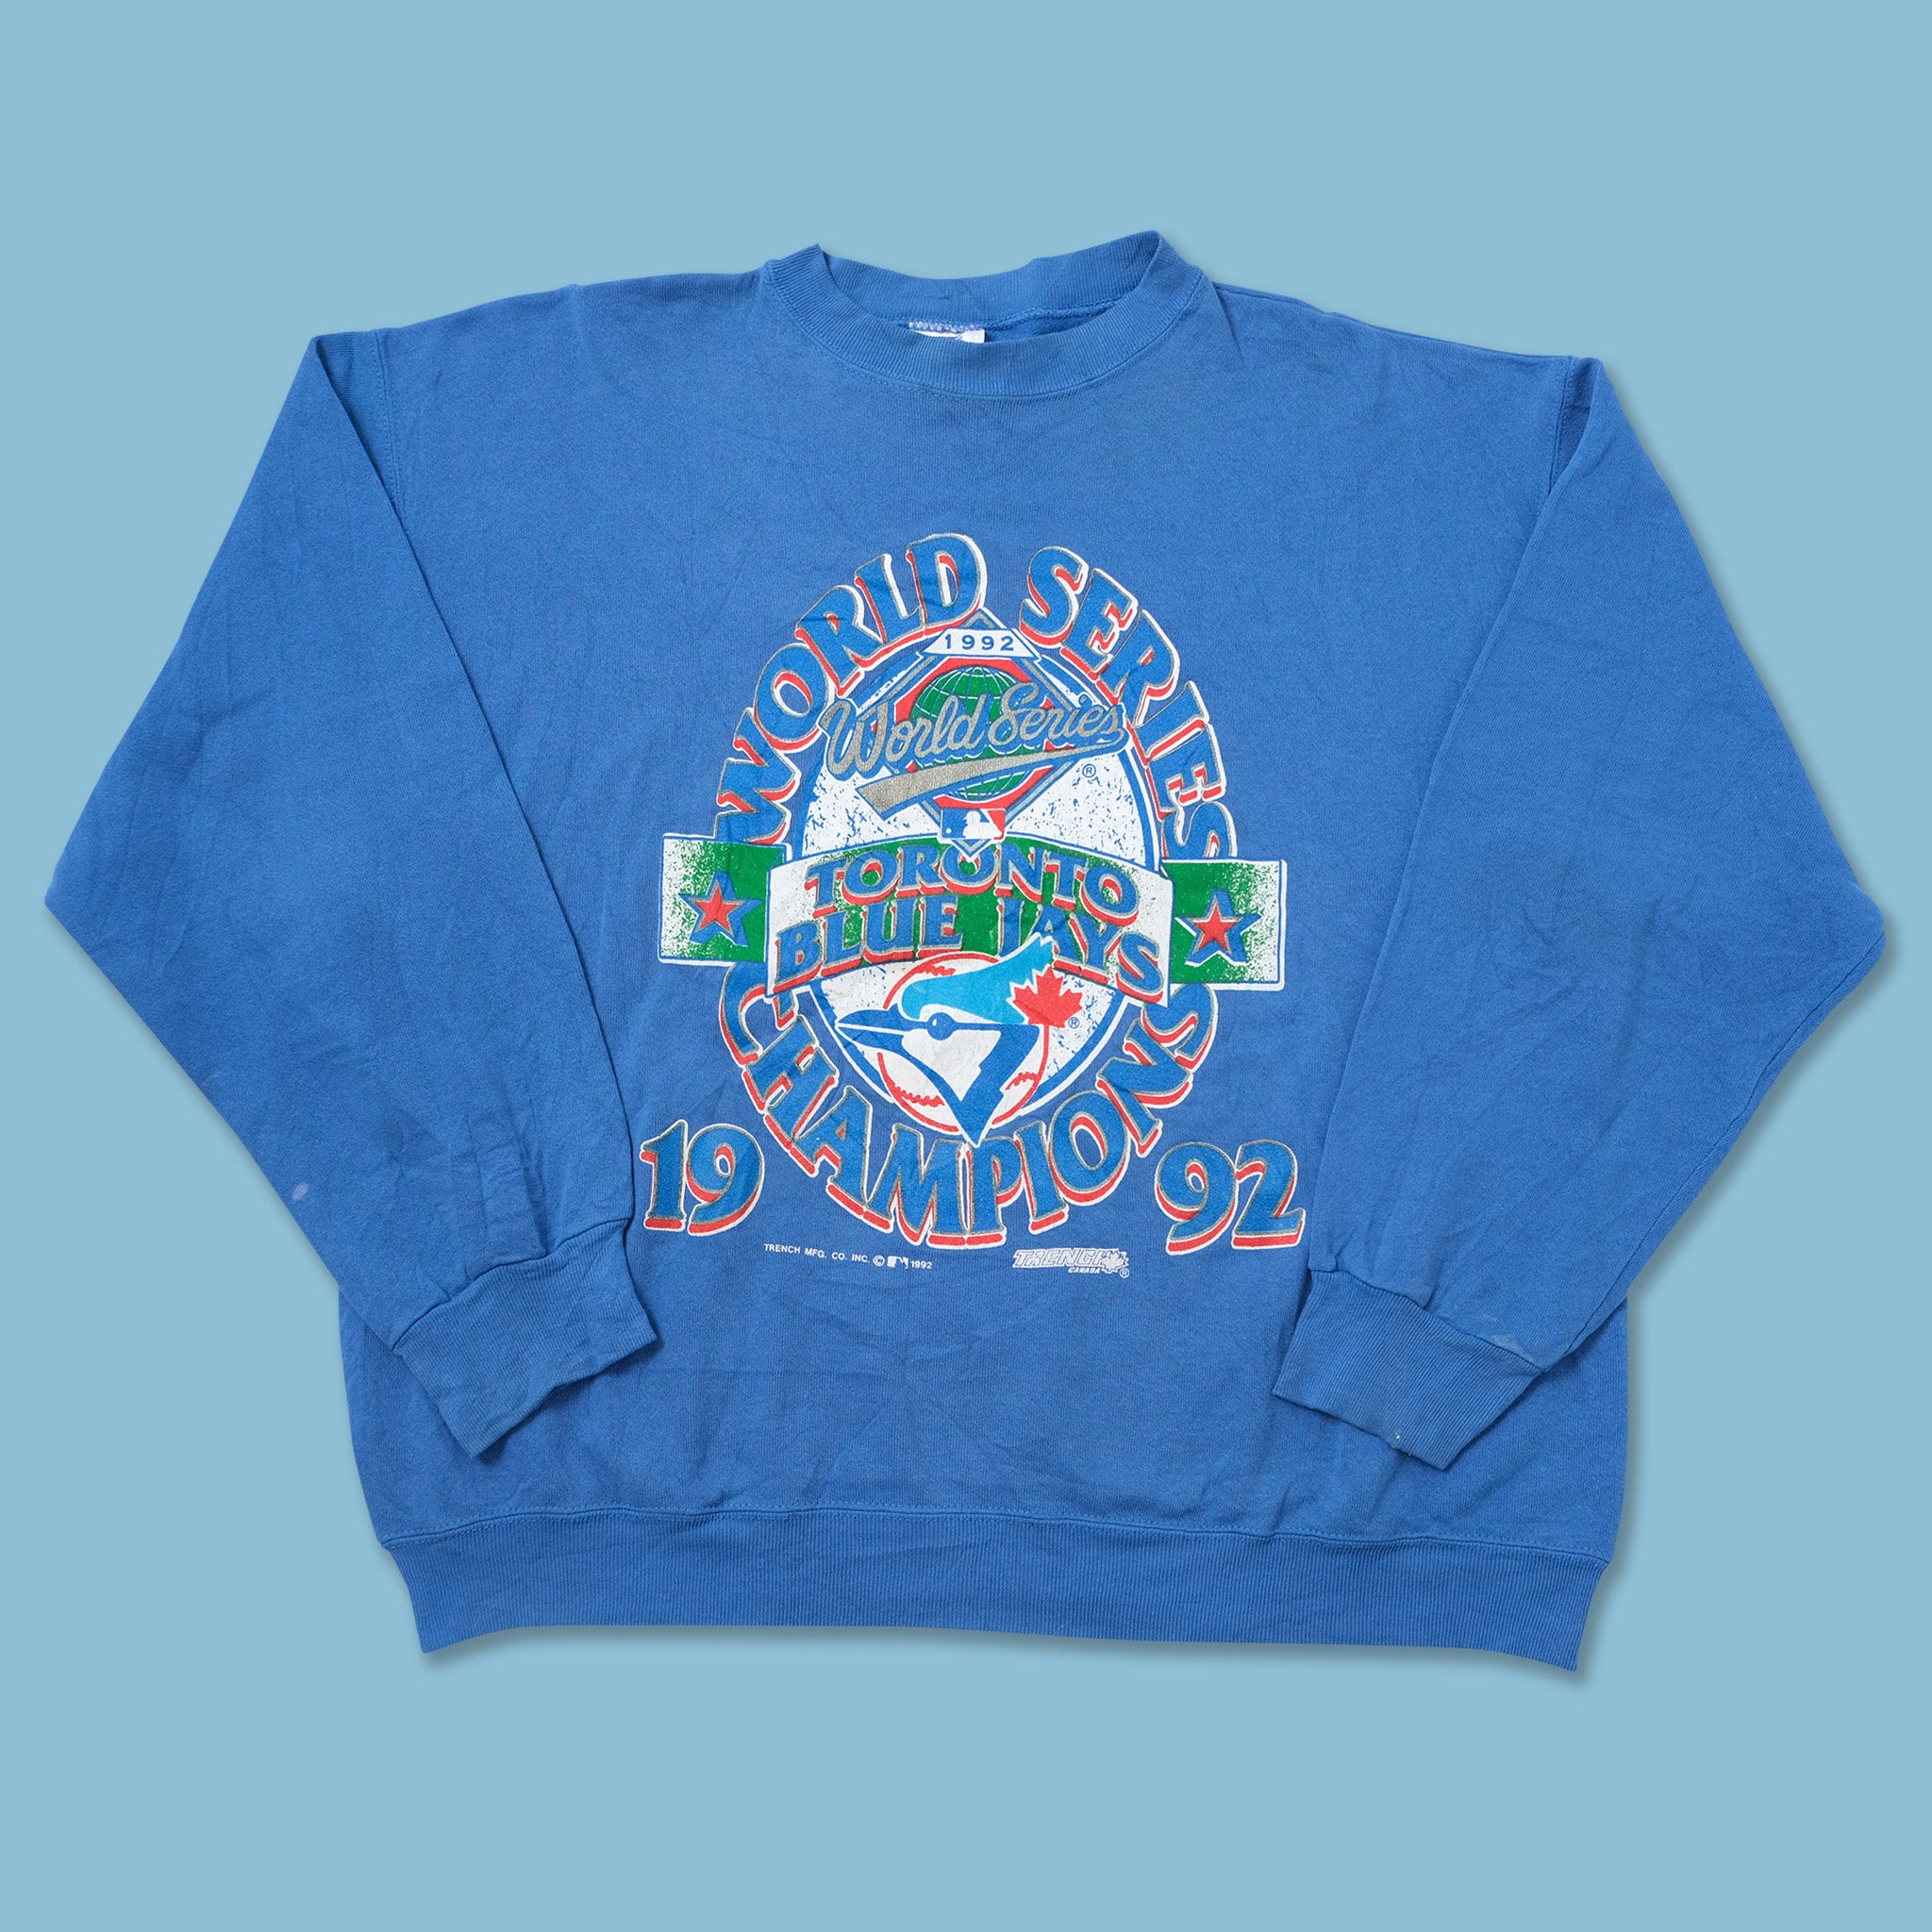 Yes I'm old but I saw toronto blue jays 1992-1993 back to back world series  champions Shirt, hoodie, longsleeve, sweatshirt, v-neck tee